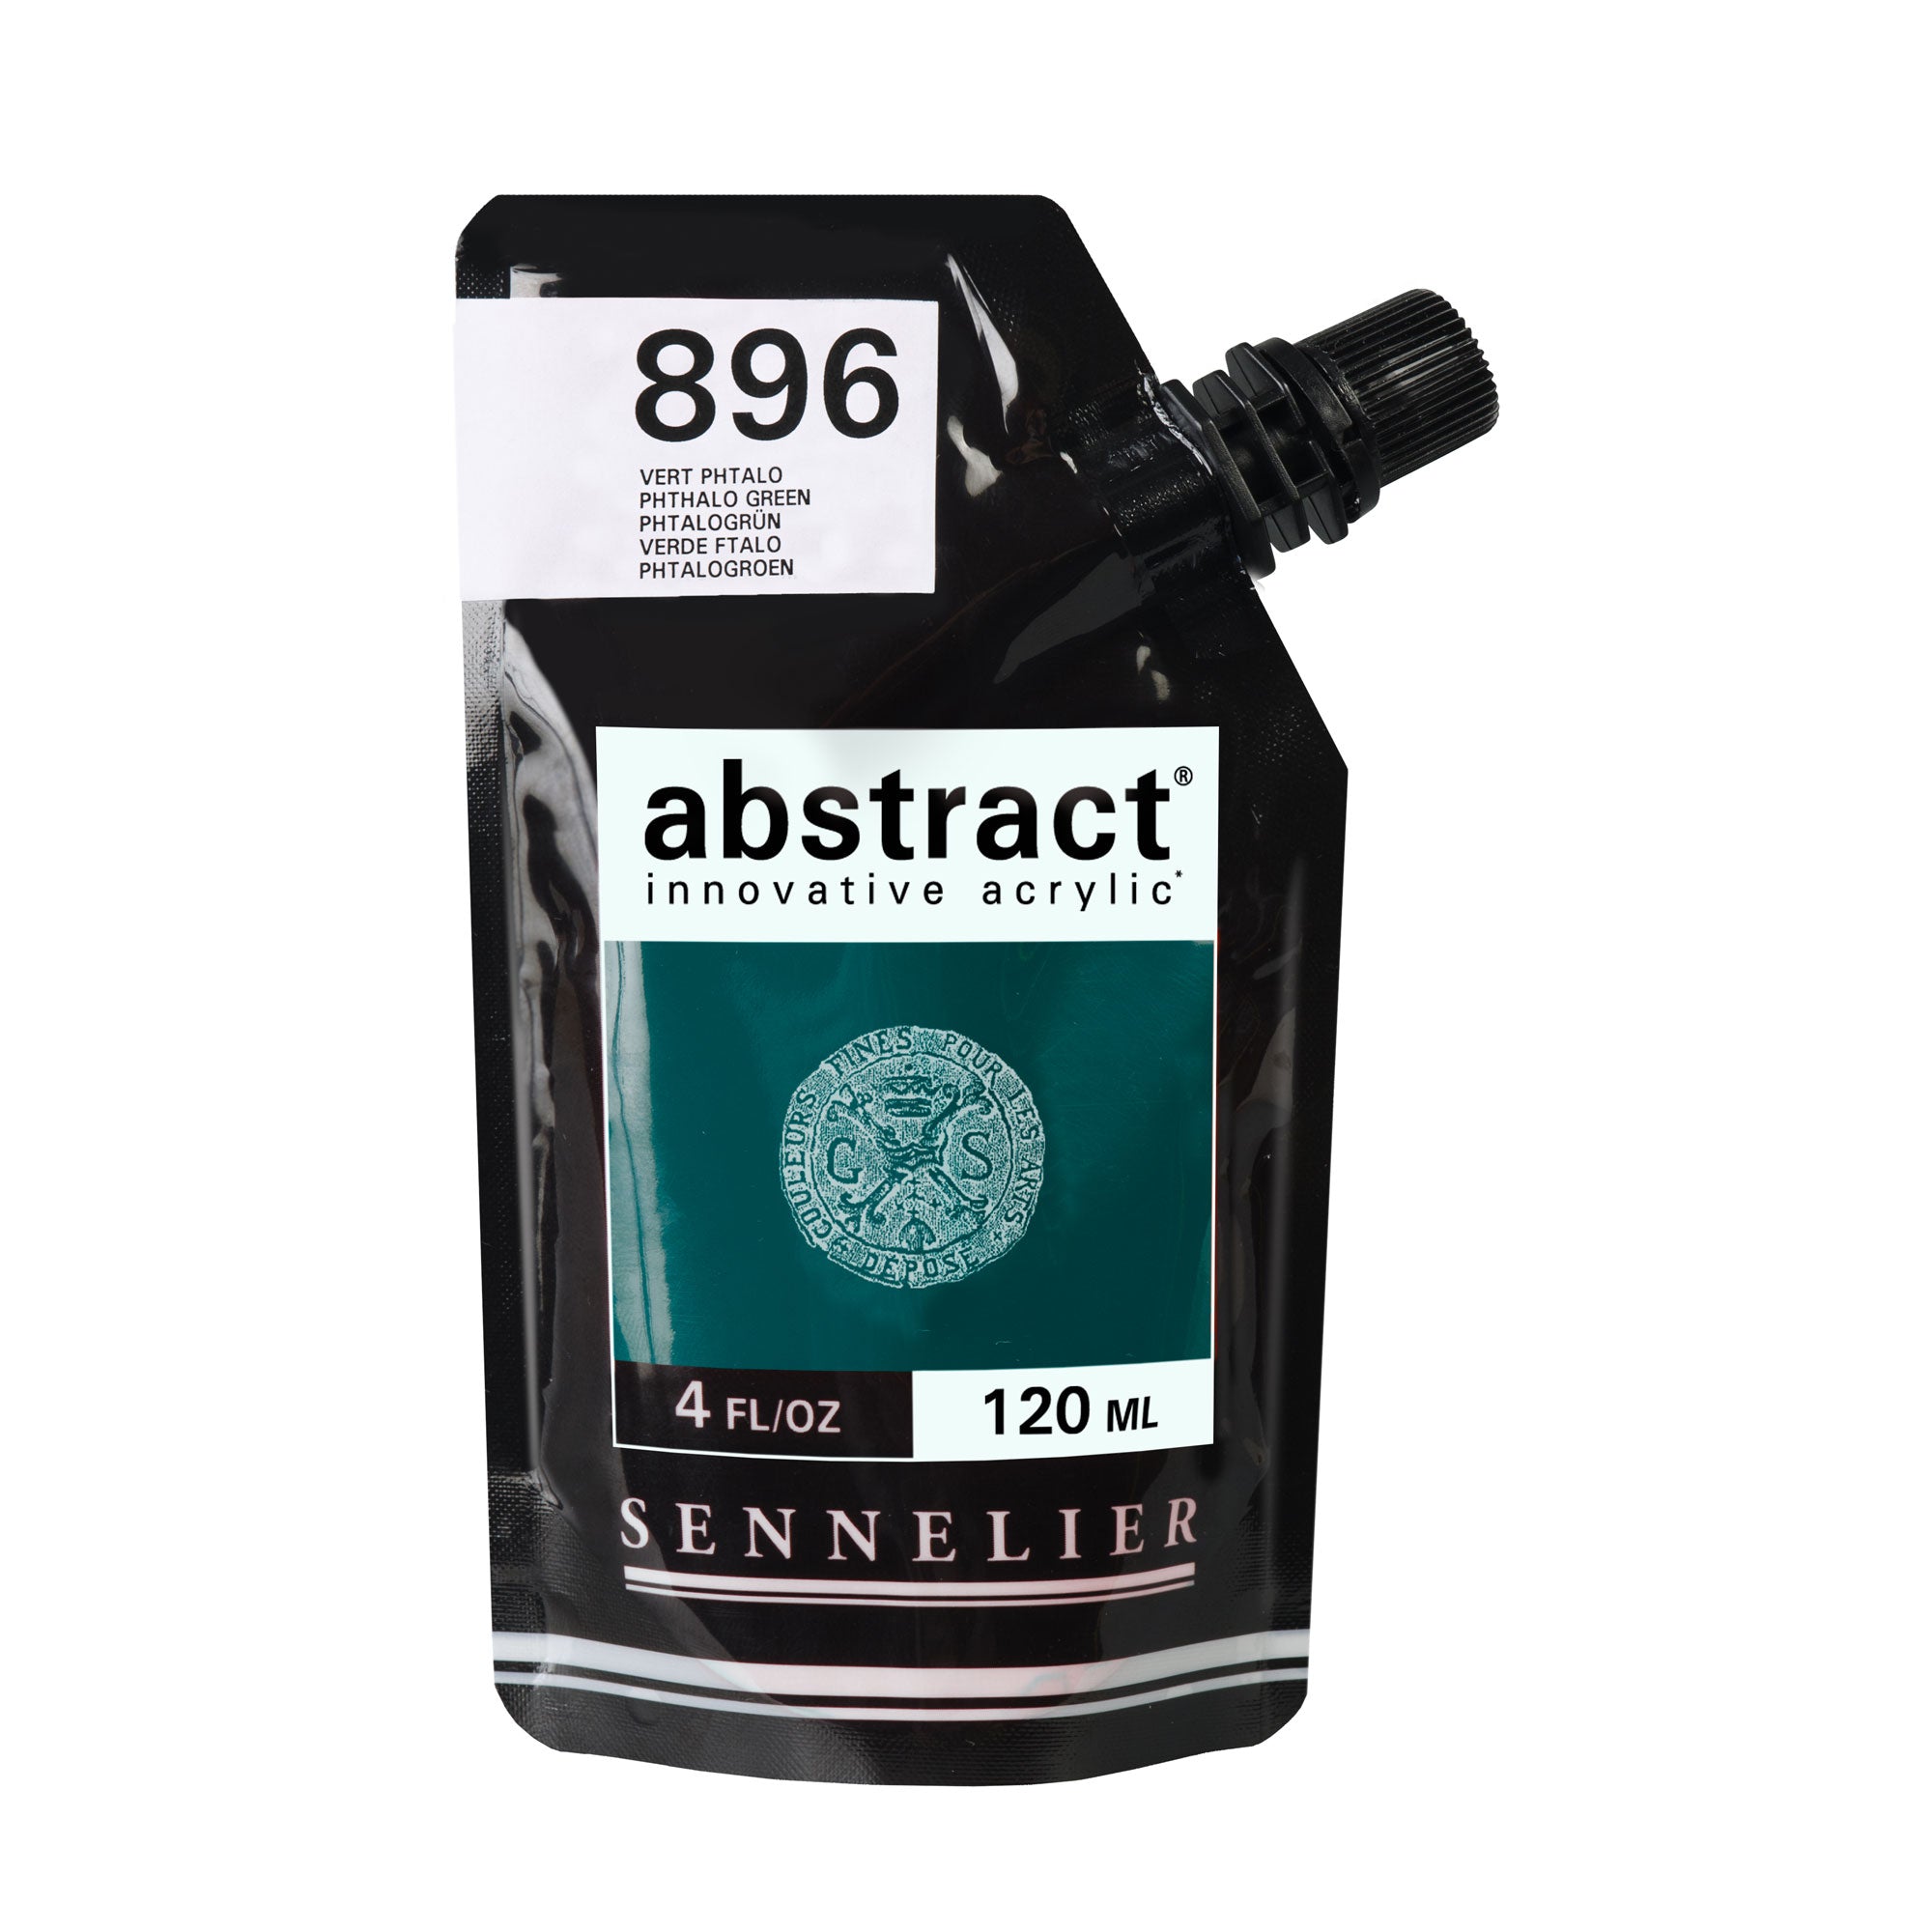 Sennelier Abstract Acrylic - 120ml